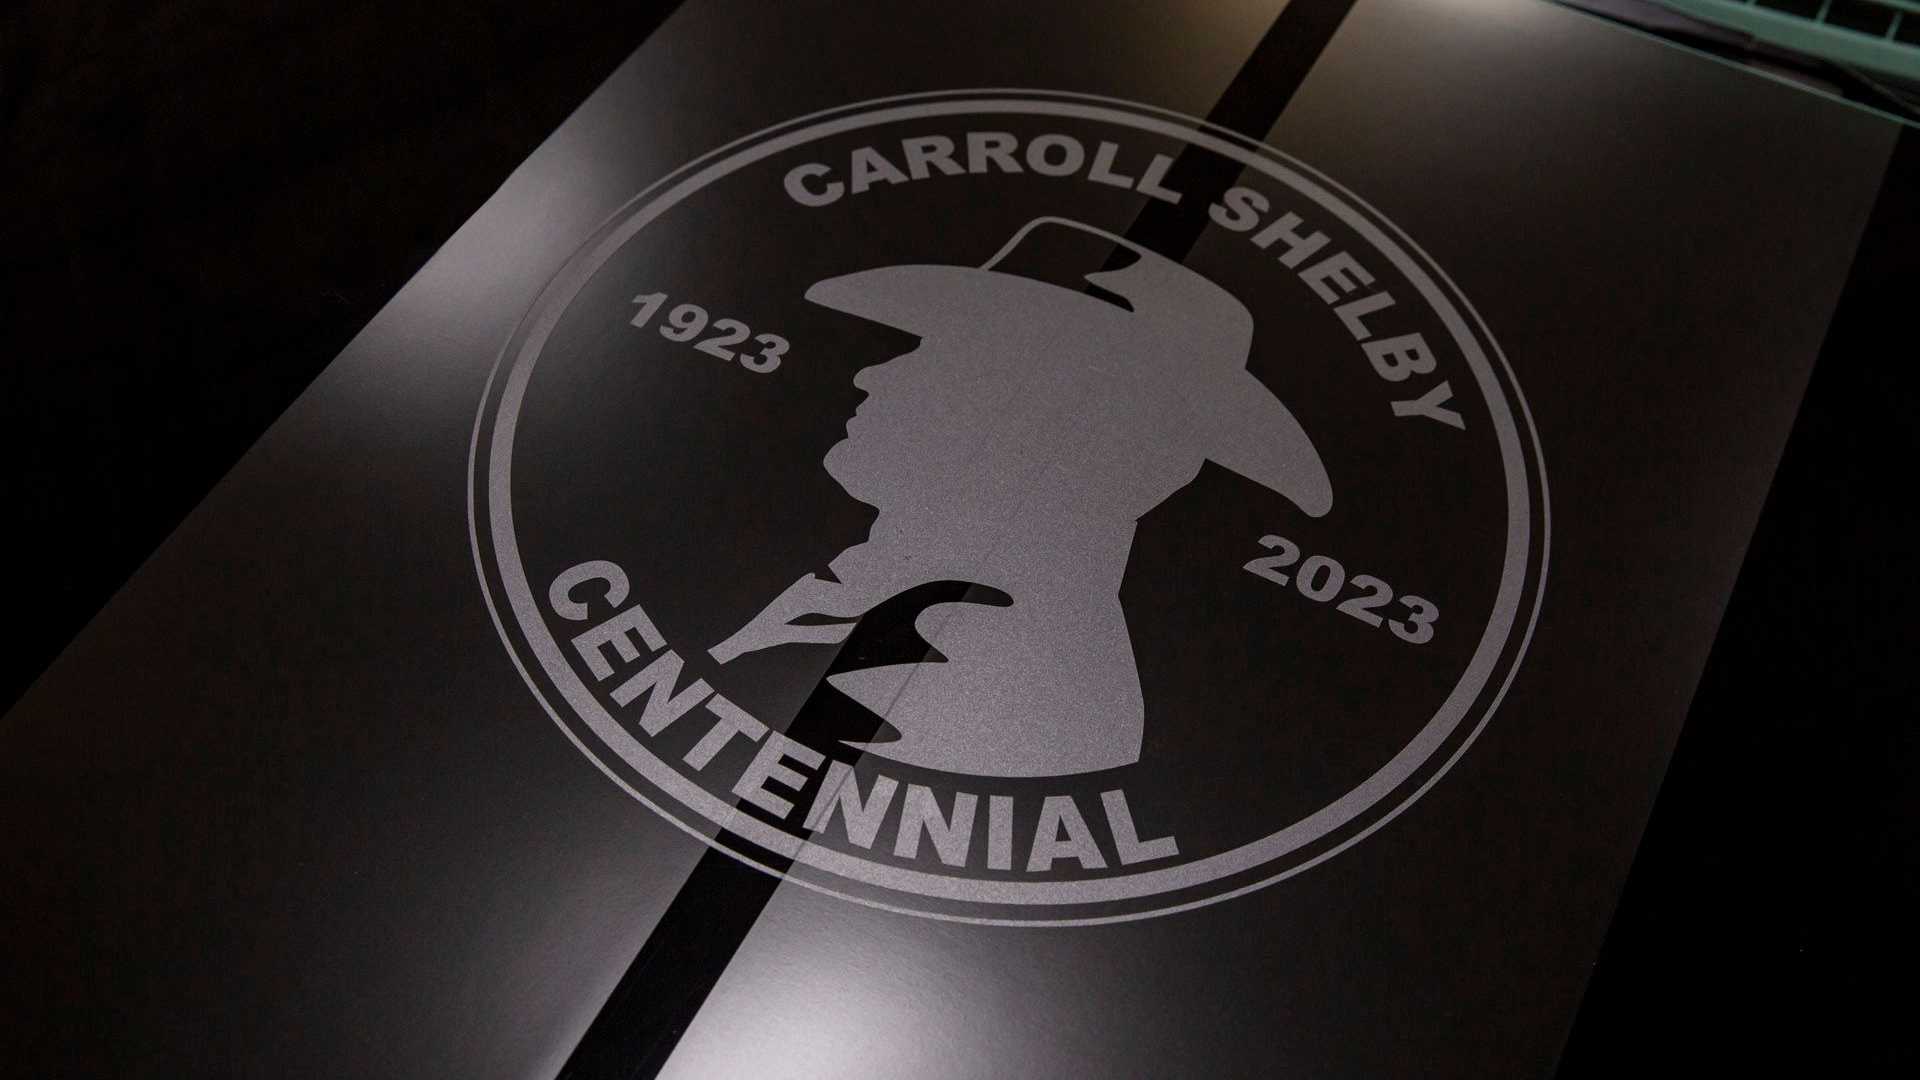 2023 Ford Mustang GT Carroll Shelby Centennial Edition 2